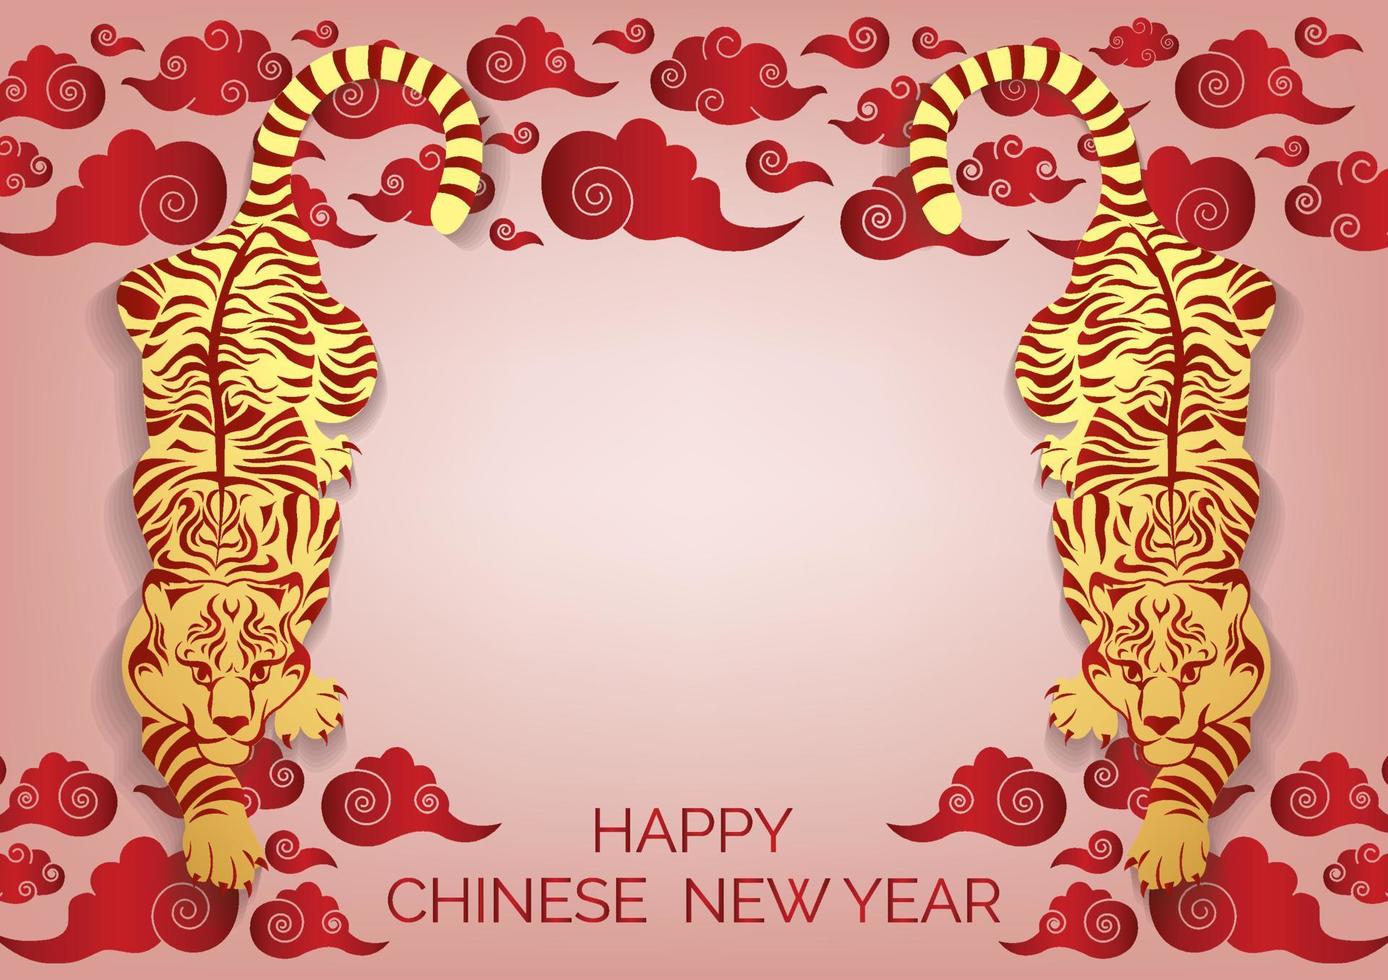 oriental new year art work design for website background vector